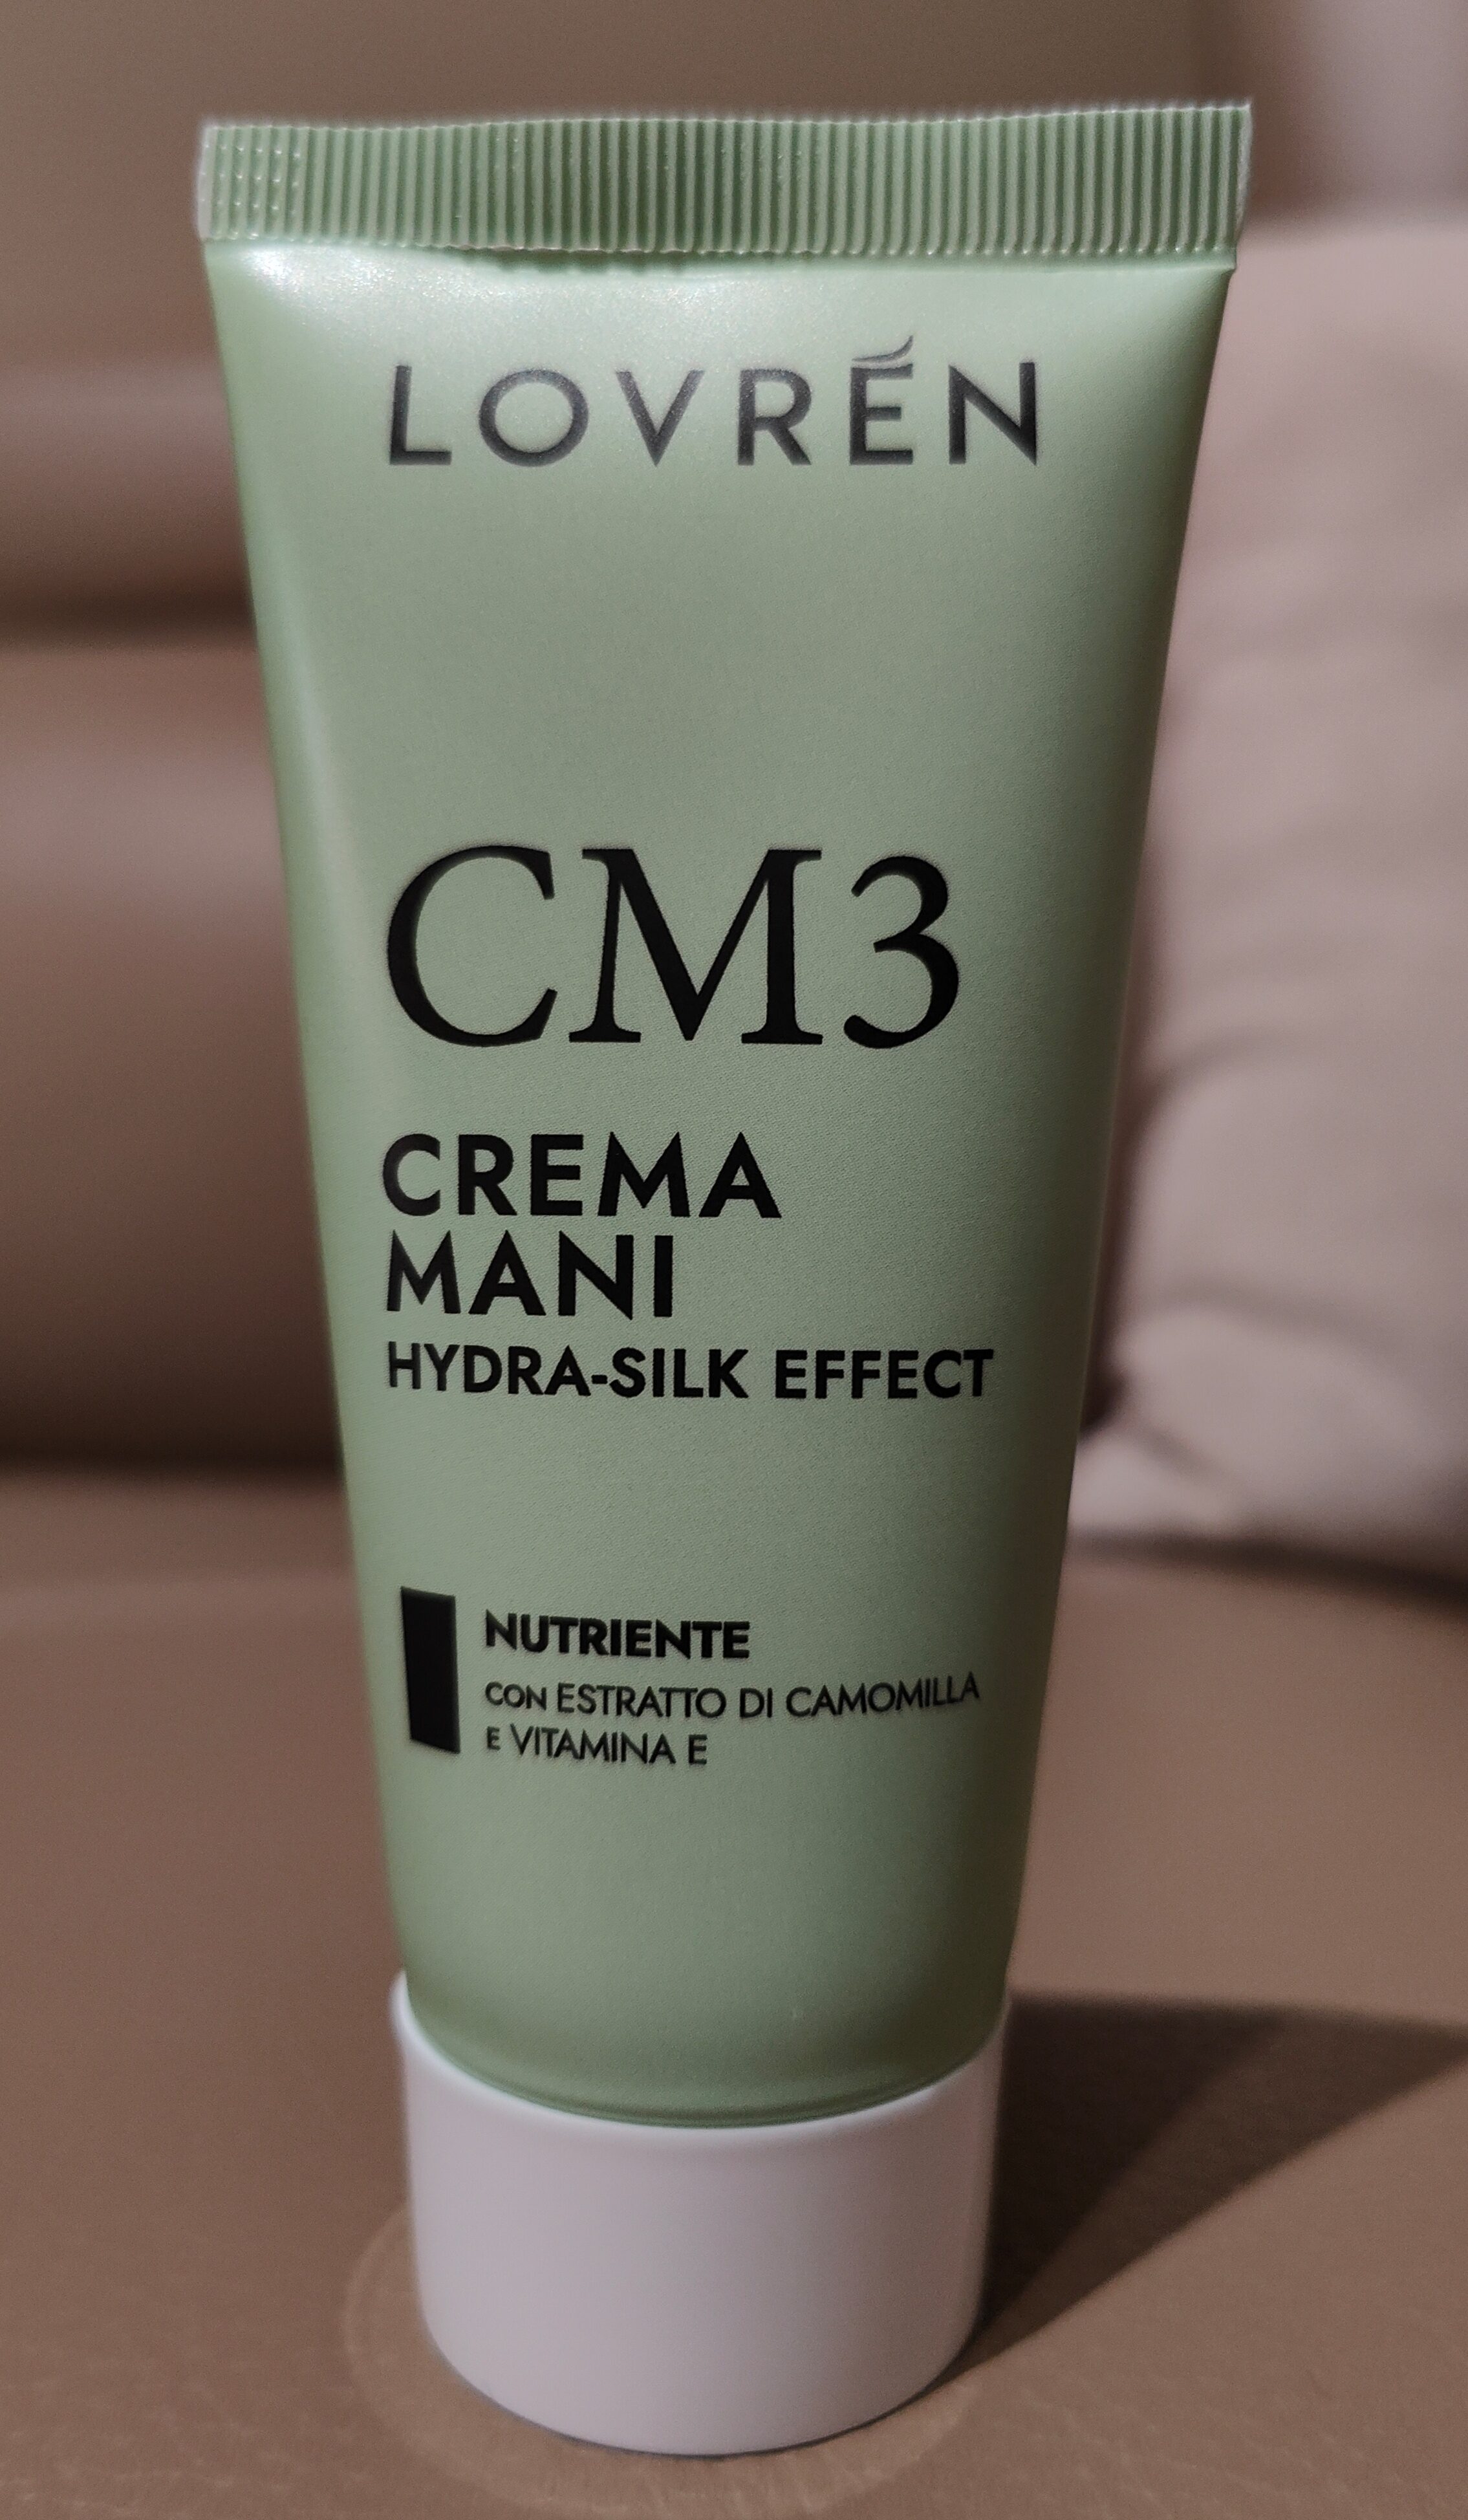 CM3 Crema Mani Hydra-Silk Effect - 製品 - it